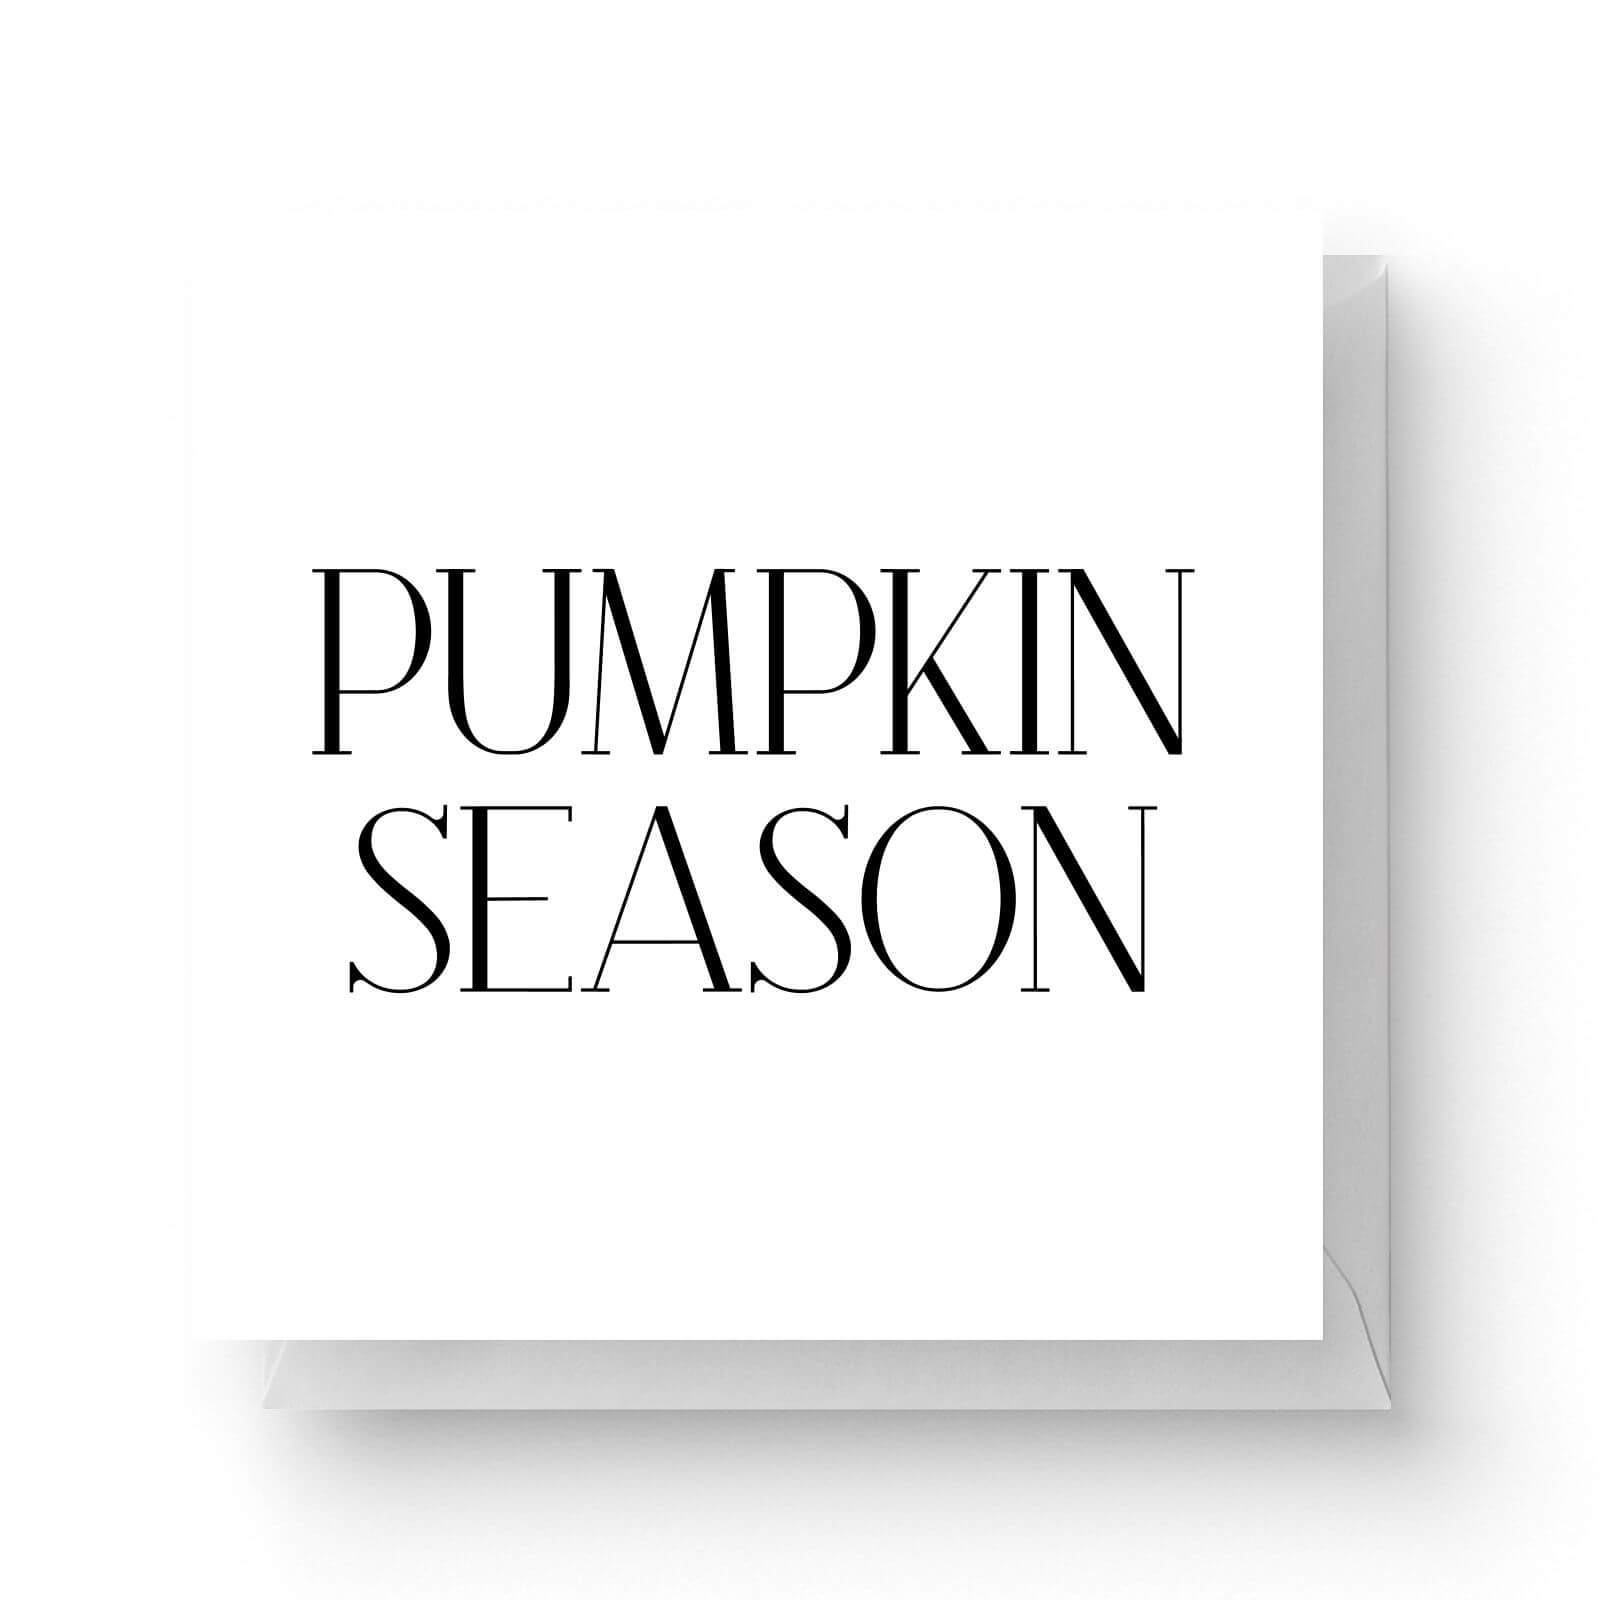 Pumpkin Season Square Greetings Card